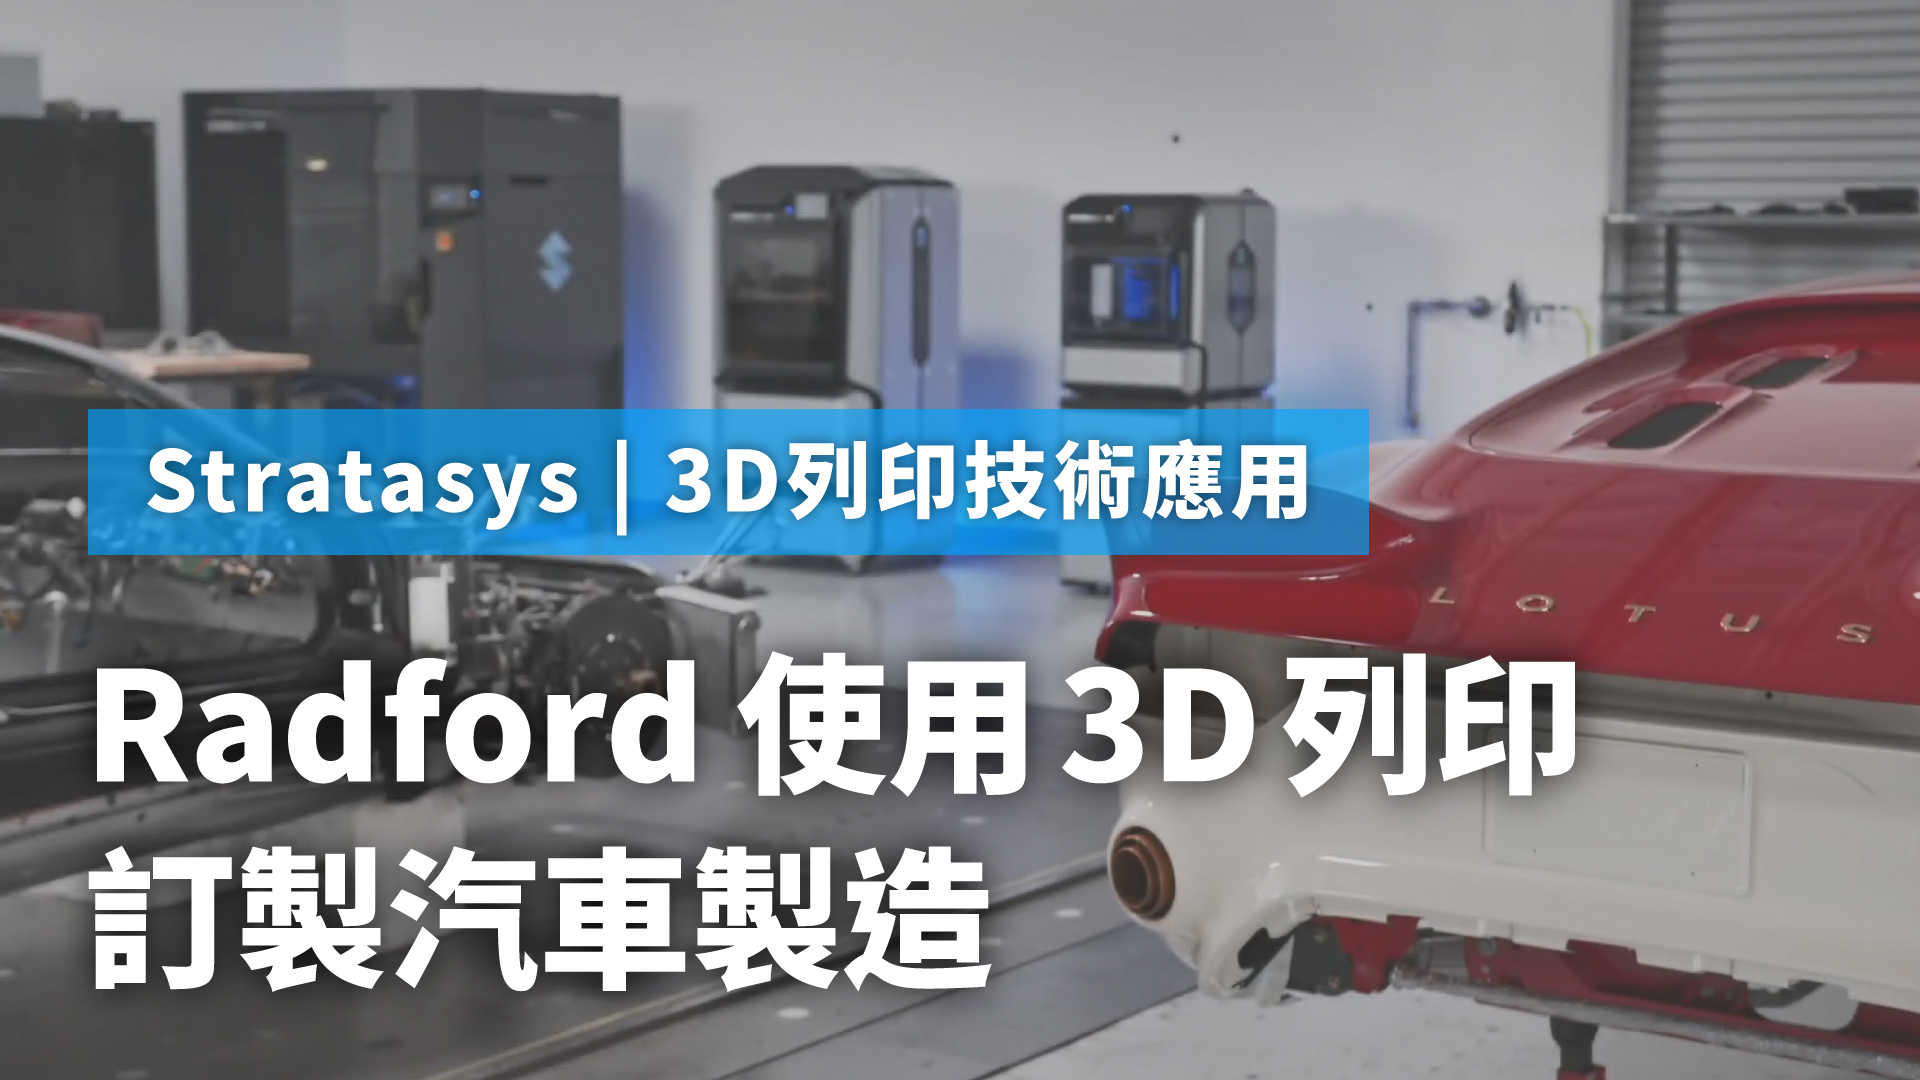 Radford利用Stratasys 3D列印生產 500 個汽車零件